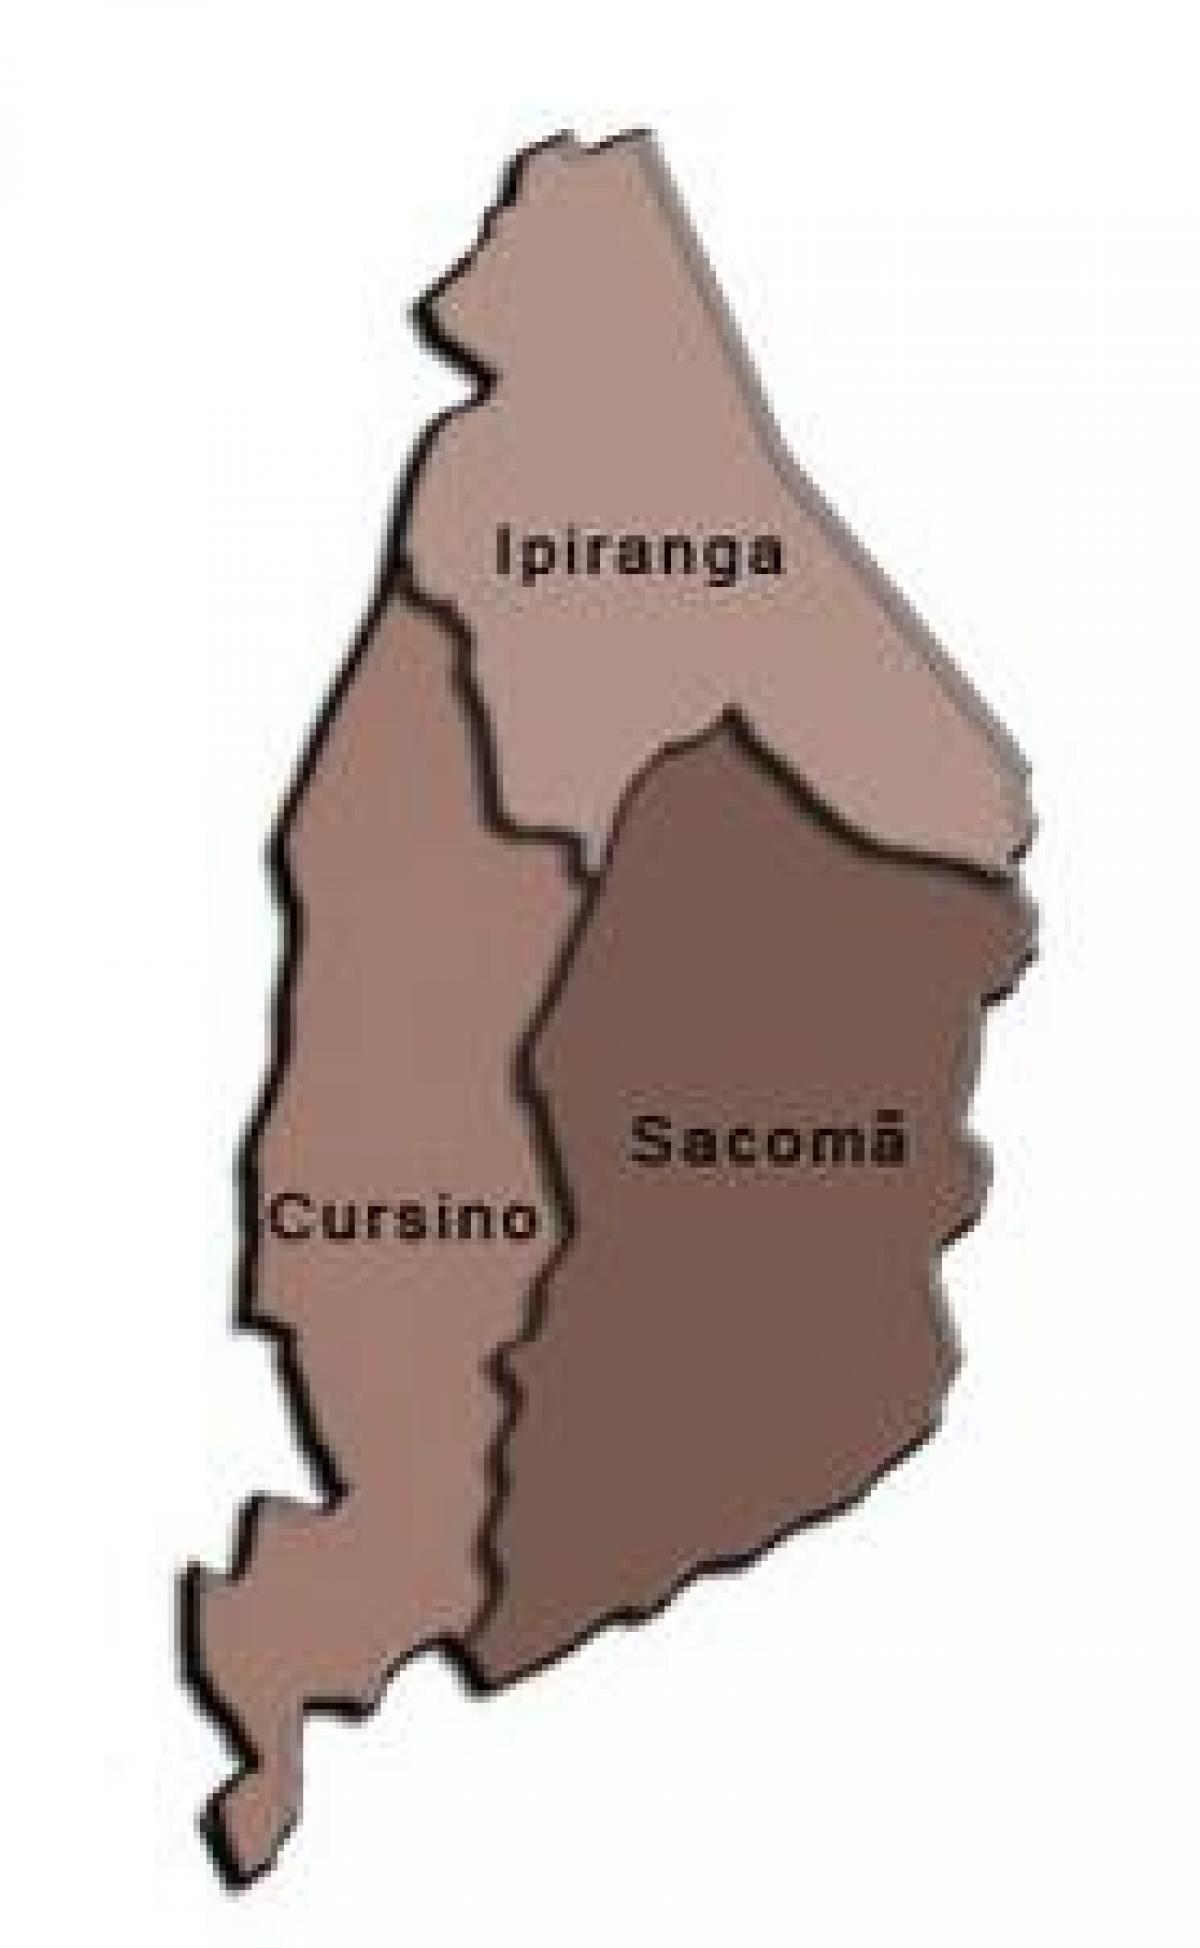 Mapa do Ipiranga, sub-prefeitura